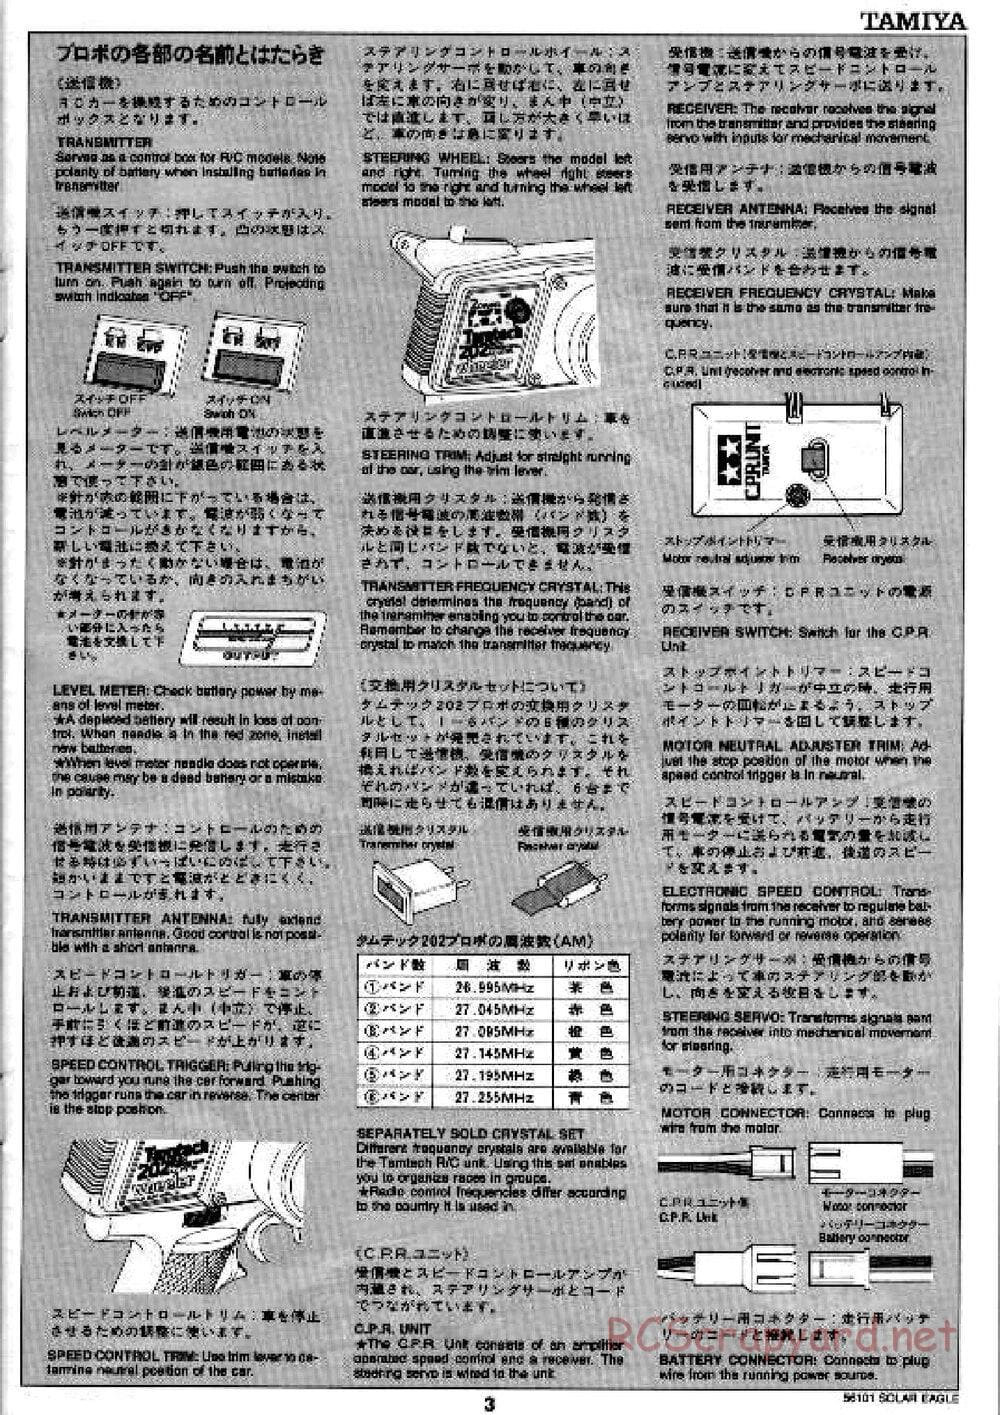 Tamiya - Solar Eagle SRC-6000 Chassis - Manual - Page 3